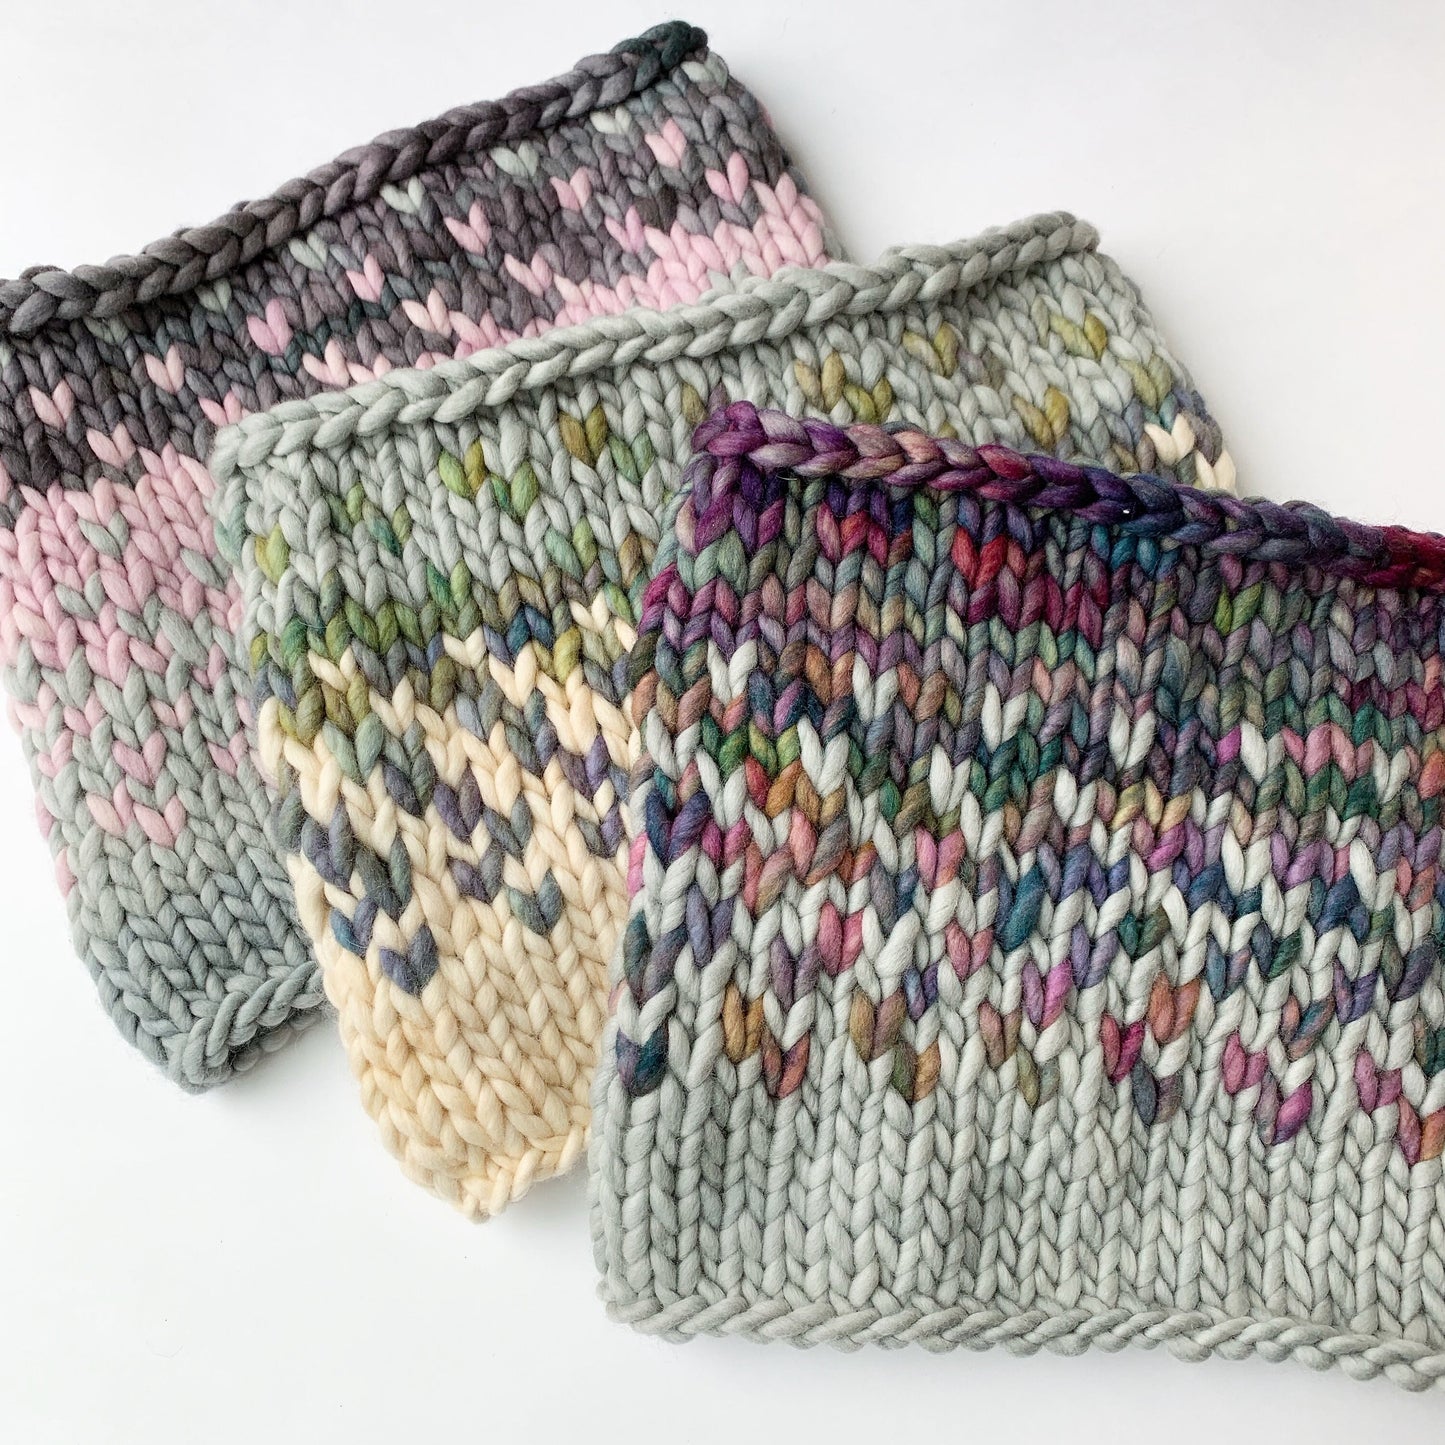 KNITTING PATTERN: Sunrise Cowl | Easy Fair Isle Knit Cowl Pattern | Super Bulky Yarn Scrap Yarn Pattern | Ombre Knitting Pattern